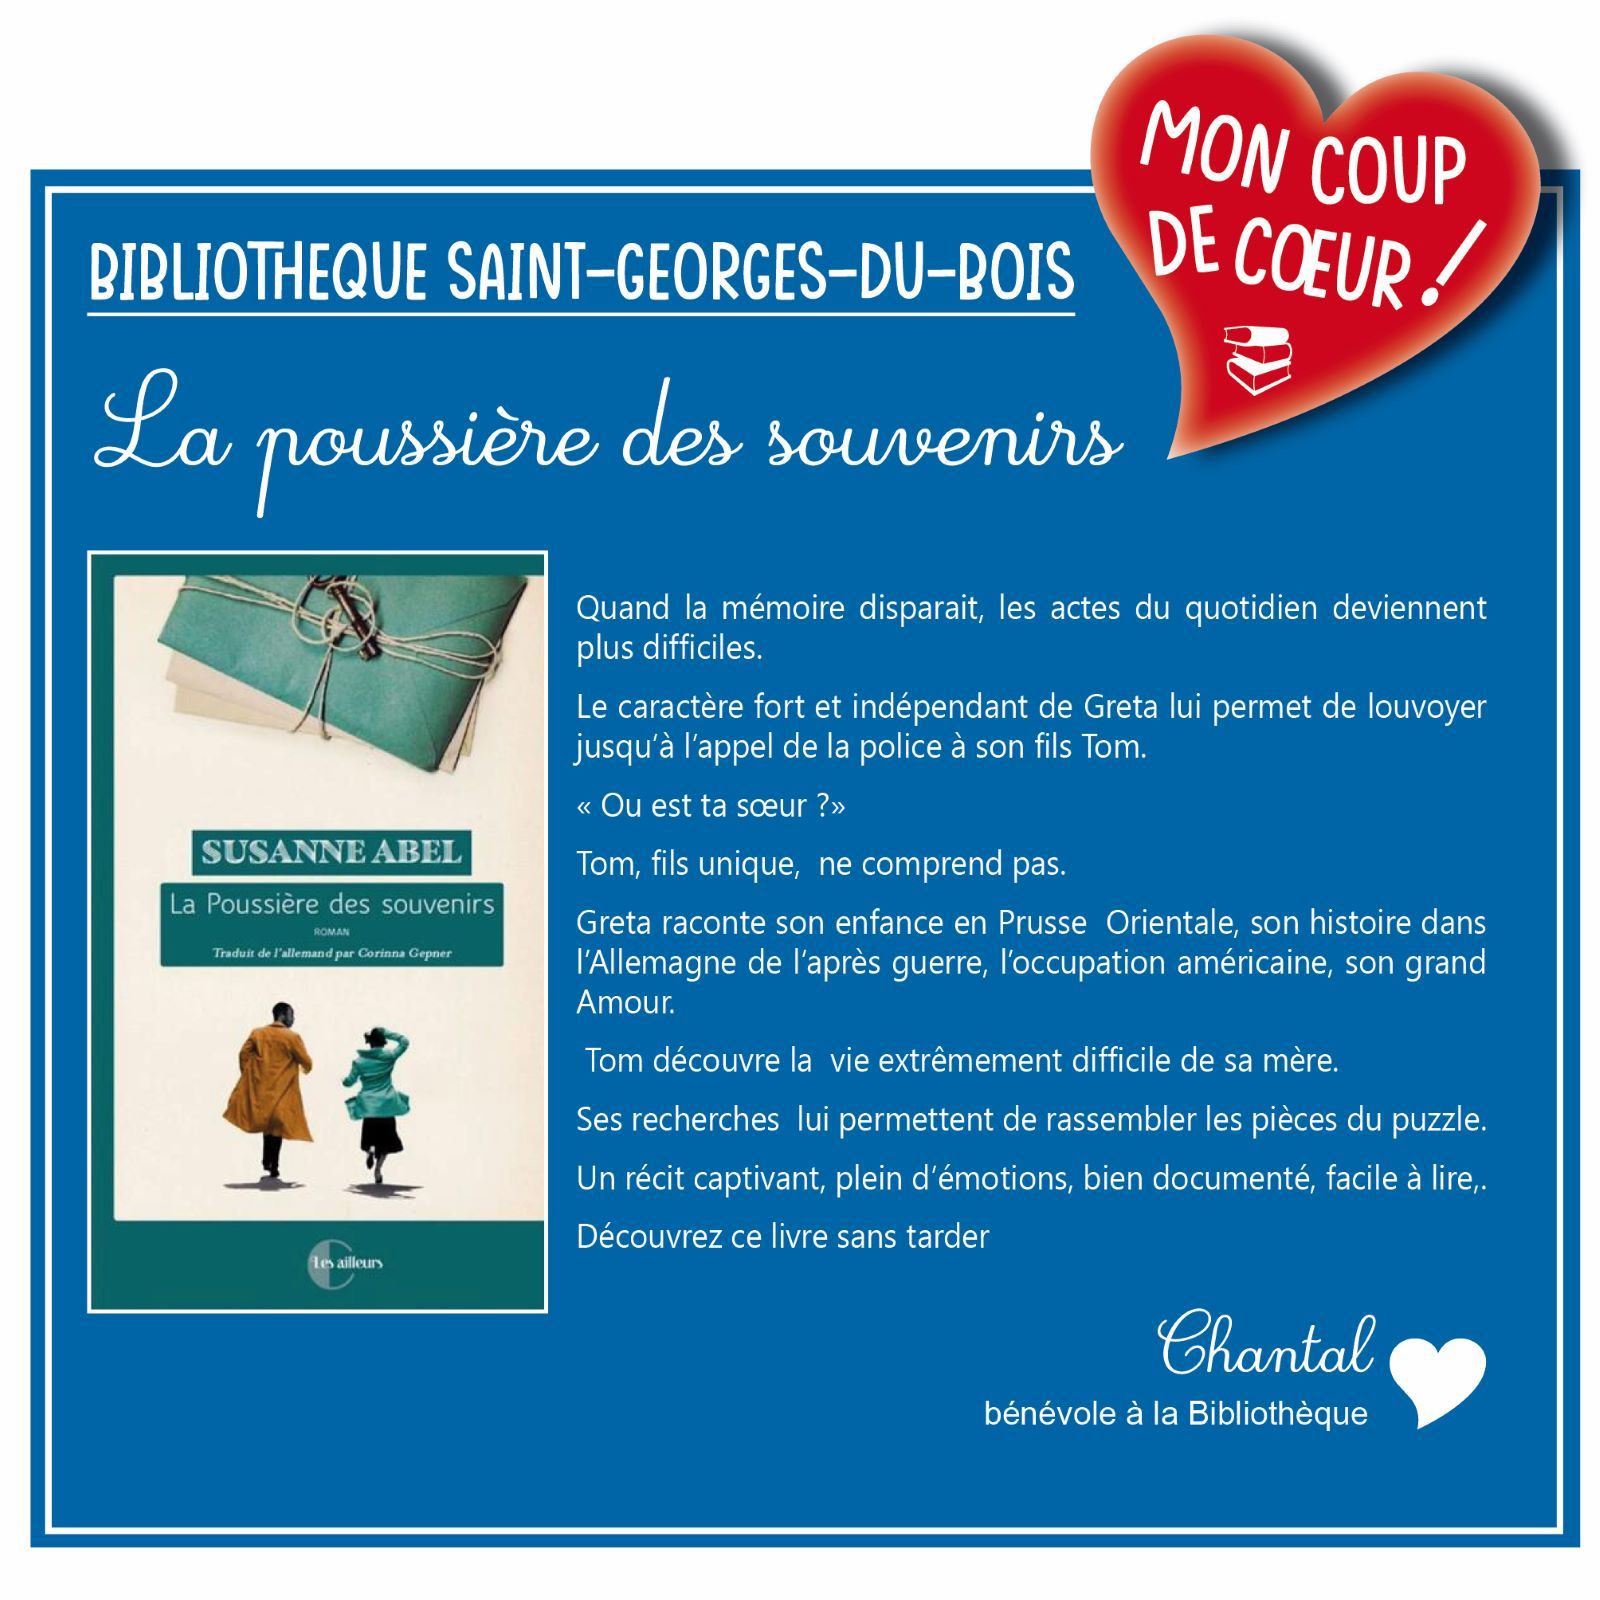 202403 CoupDeCoeur Chantal